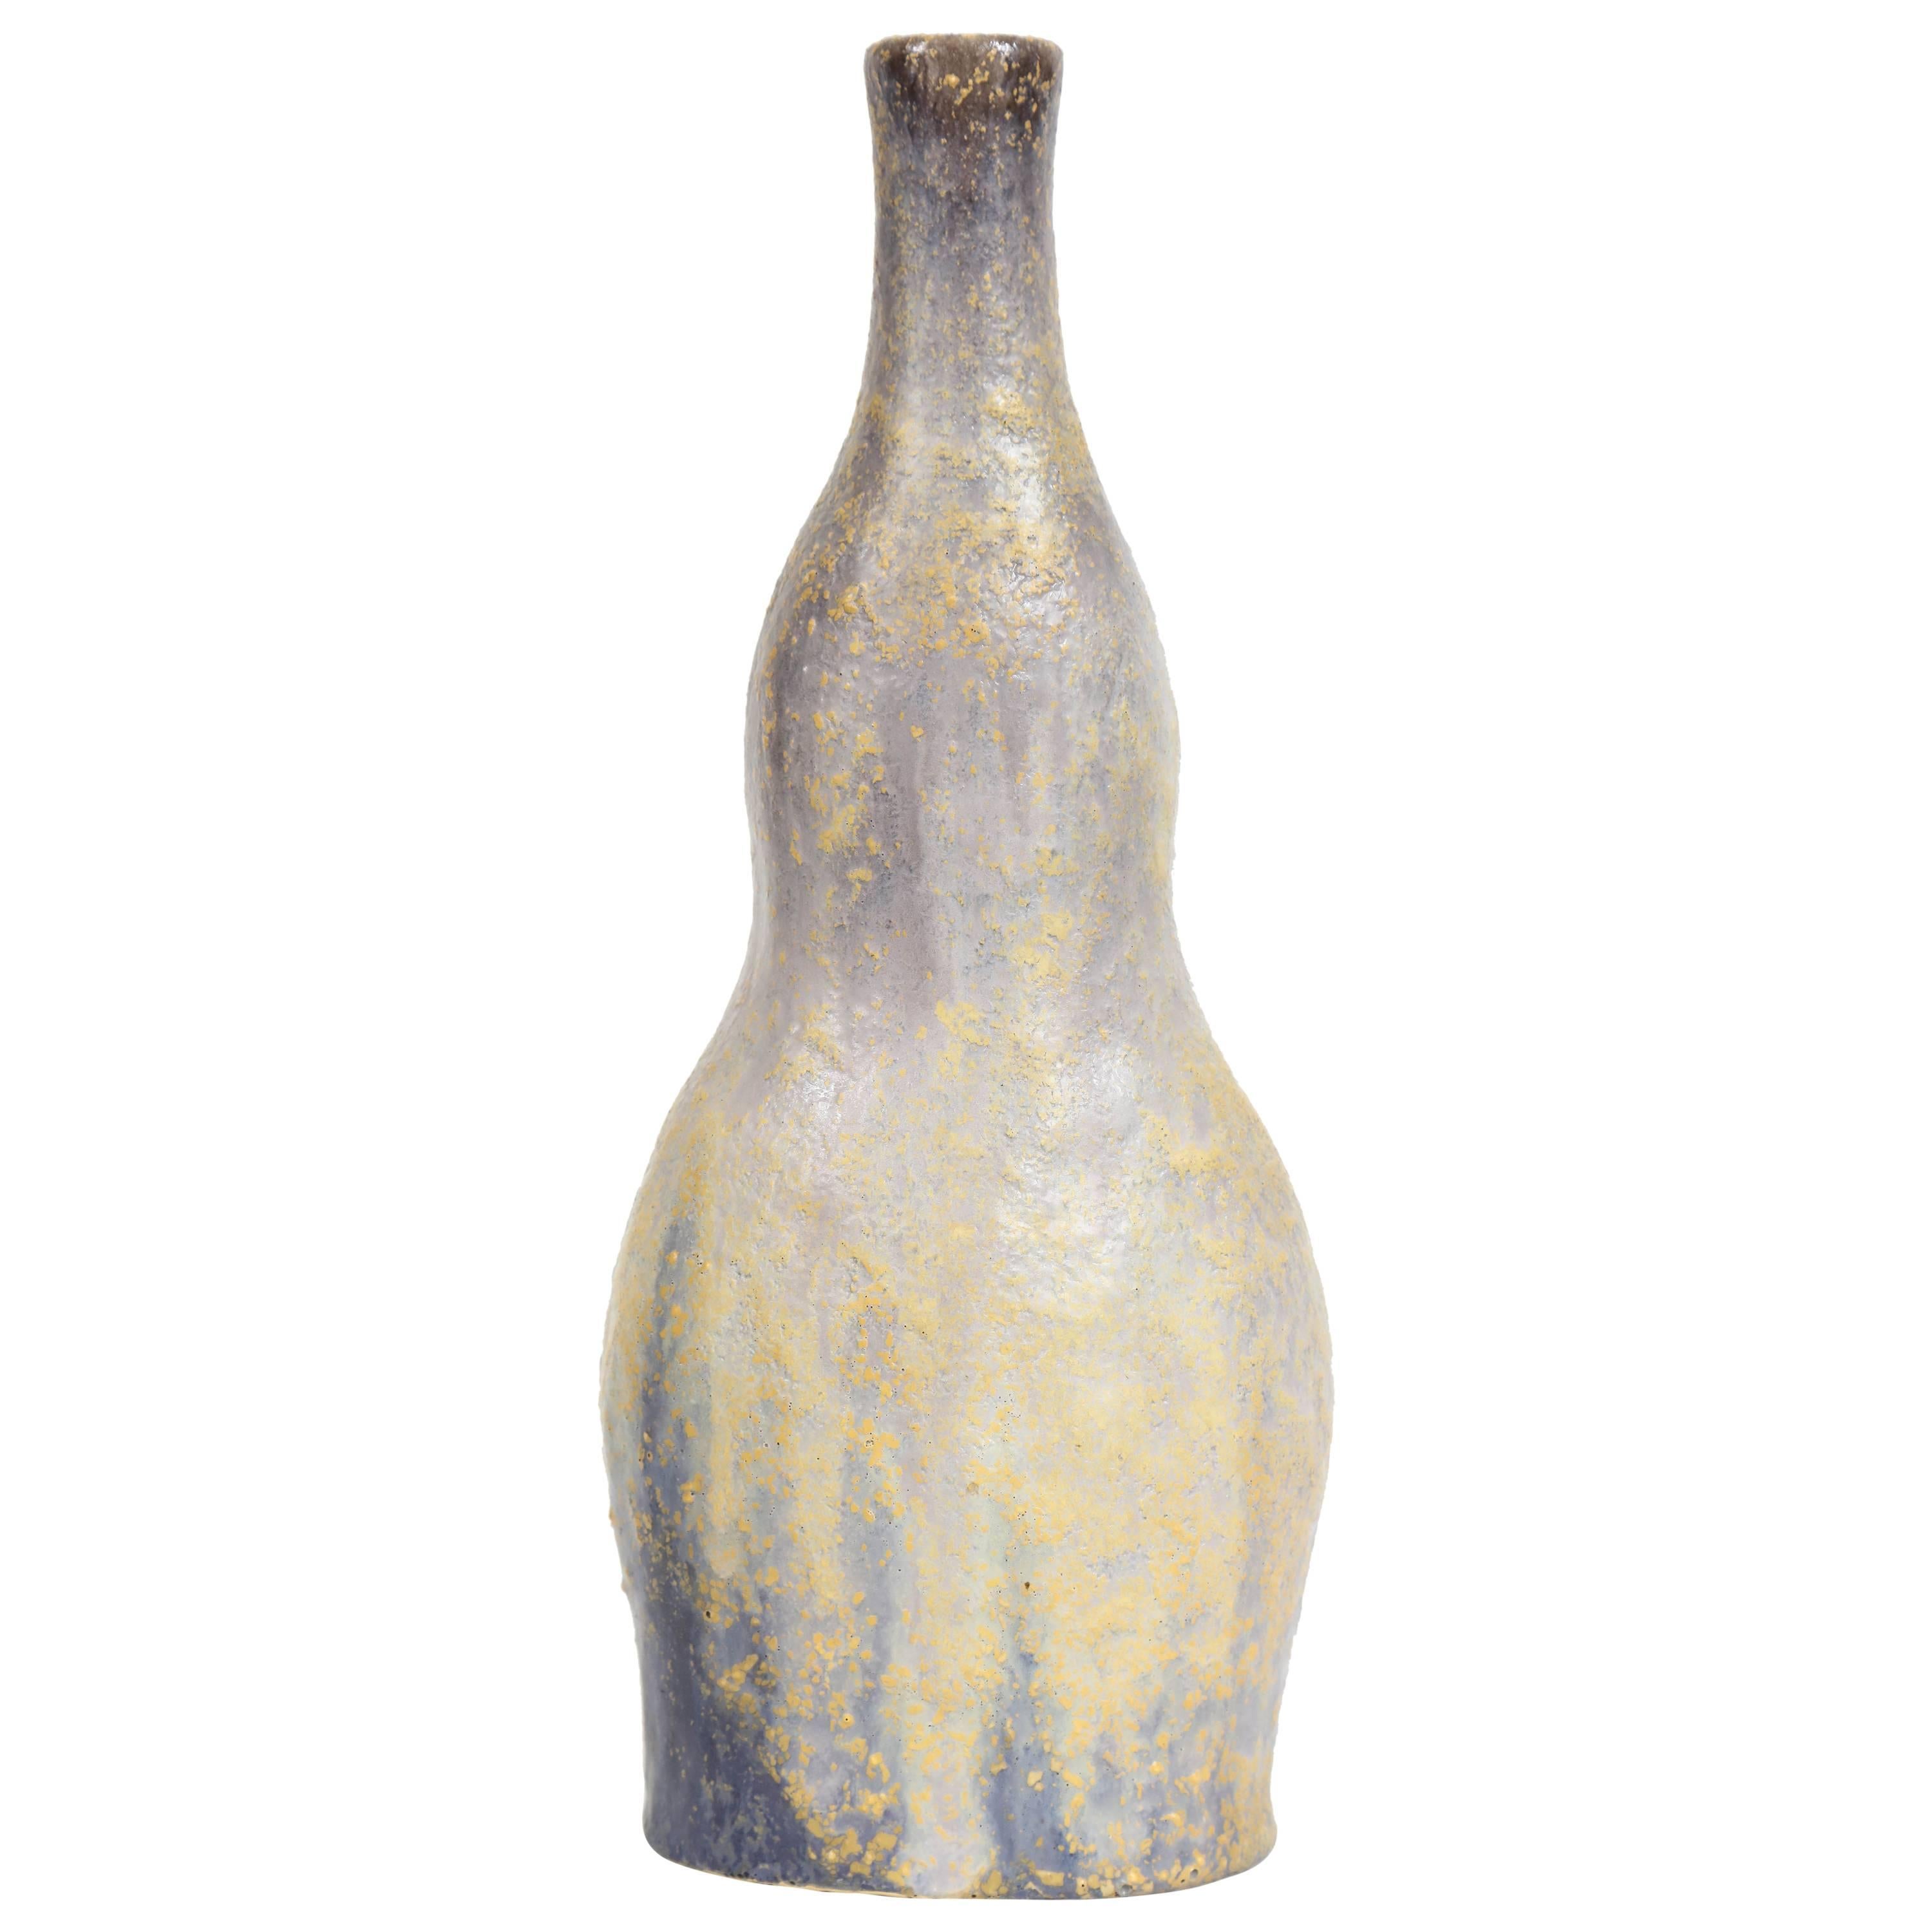 Marcello Fantoni Ceramic Bottle Vase, Glazed Stoneware, circa 1970s